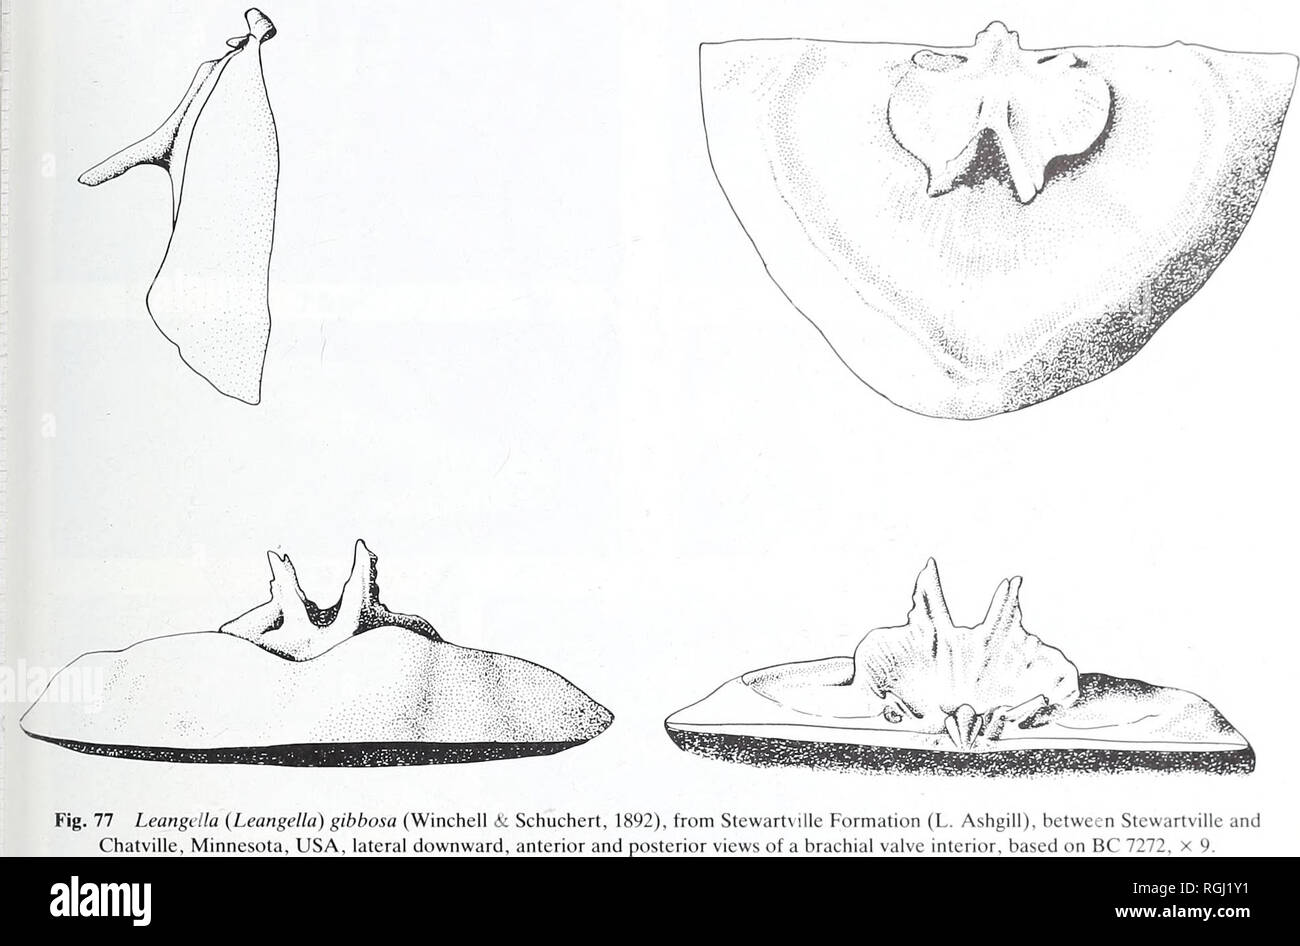 . Bulletin of the British Museum (Natural History). Geology.. CLASSIFICATION OF PLECTAMBONITACEA 117. (revised Melou 1971: 99; pi. 2, figs 4-9) from Derfel Limestone (L. Caradoc), Derfel Gorge, Wales. Leptestiina meloui Havh'cek, 1981: 20; pi. 7, figs 1-10 from M.-U. Caradoc rocks, Gabian, Montagne Noire, France. Sampo oepiki Whittington, 1938: 255; pi. 10, figs 15-16; pi. 11, fig. 10 from Longvillian beds (M. Caradoc), Bryngwyn Hill, Llanfyllin, Powys, Wales (revised Williams, 1963: 428; pi. 10, figs 15, 16, 19-21). Benignites {Leptestiina) prantli Havli'cek, 1952: 412; text-fig. 1 from Kralf Stock Photo